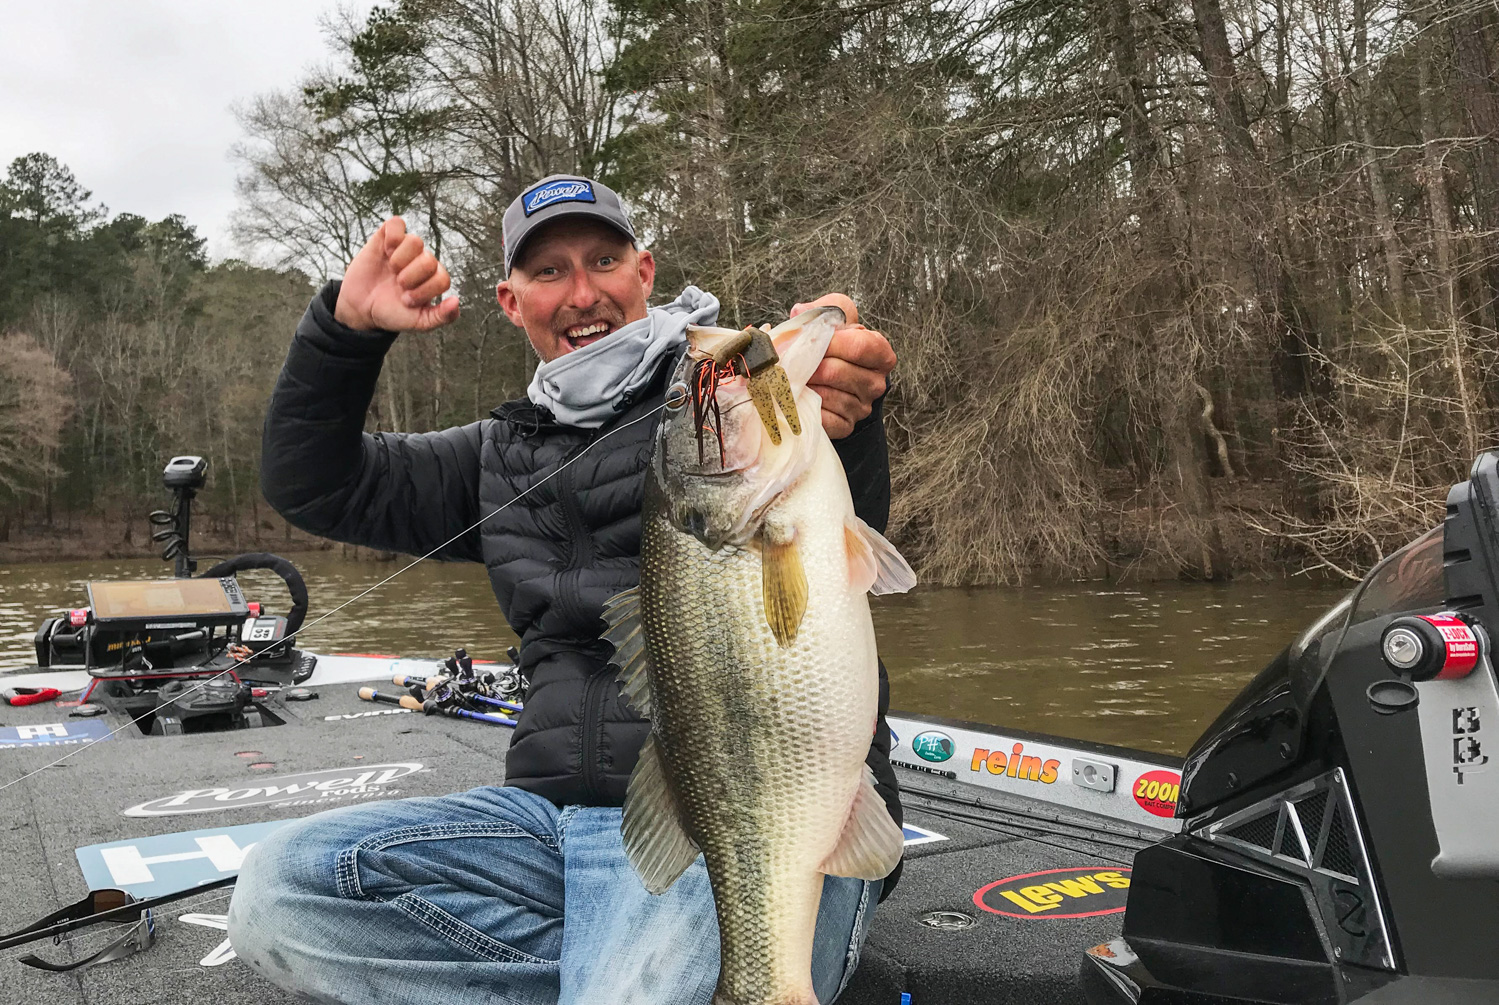 GALLERY Berkley Big Bass of Stage Three Raleigh Major League Fishing